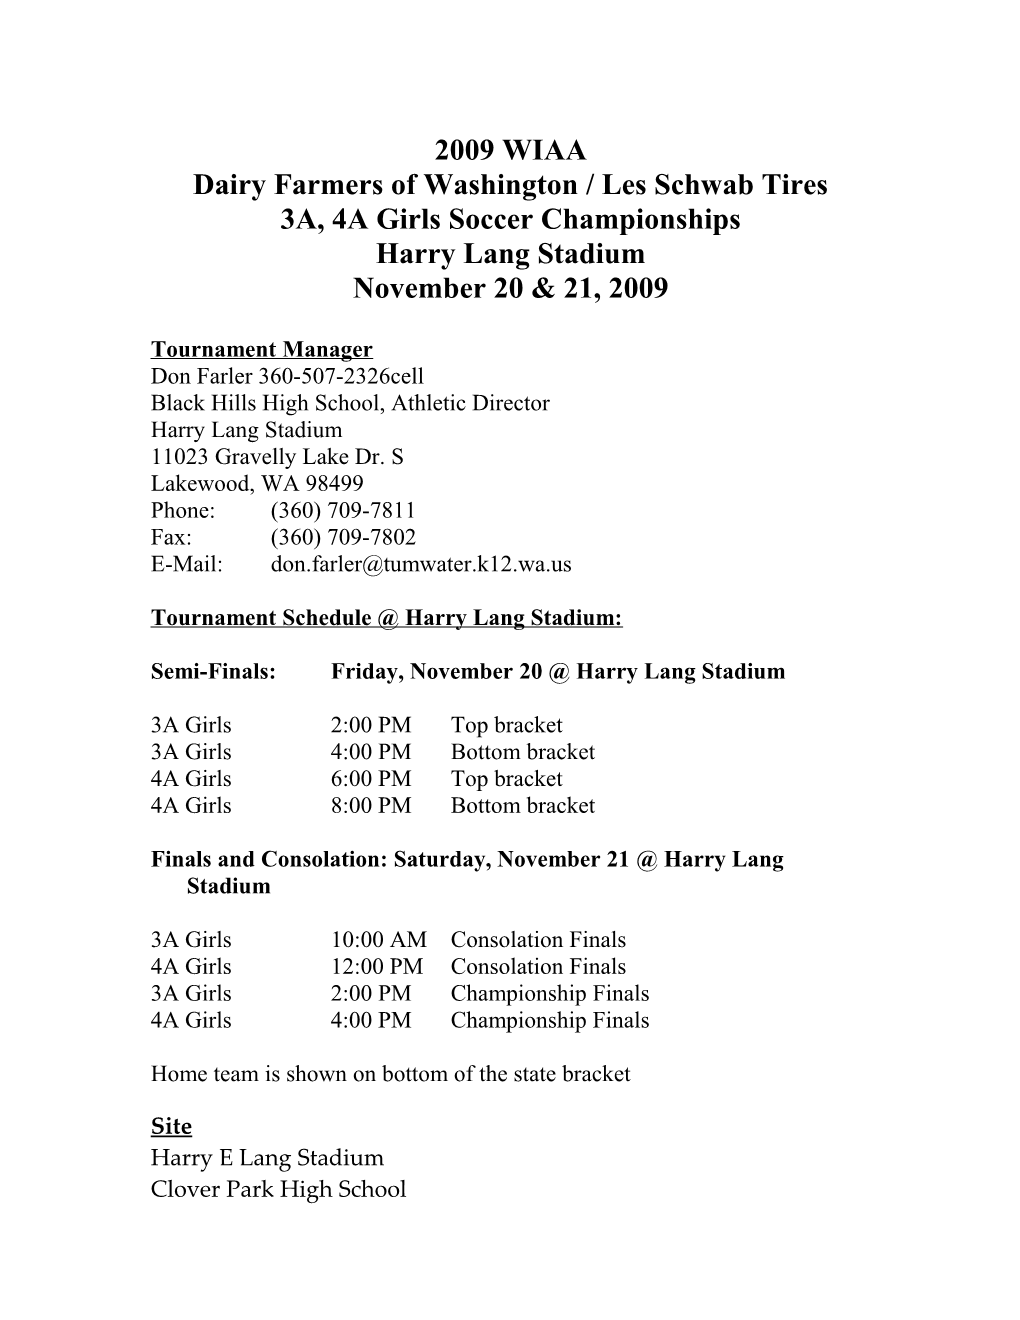 2007 WIAA/Dairy Farmers of Washington